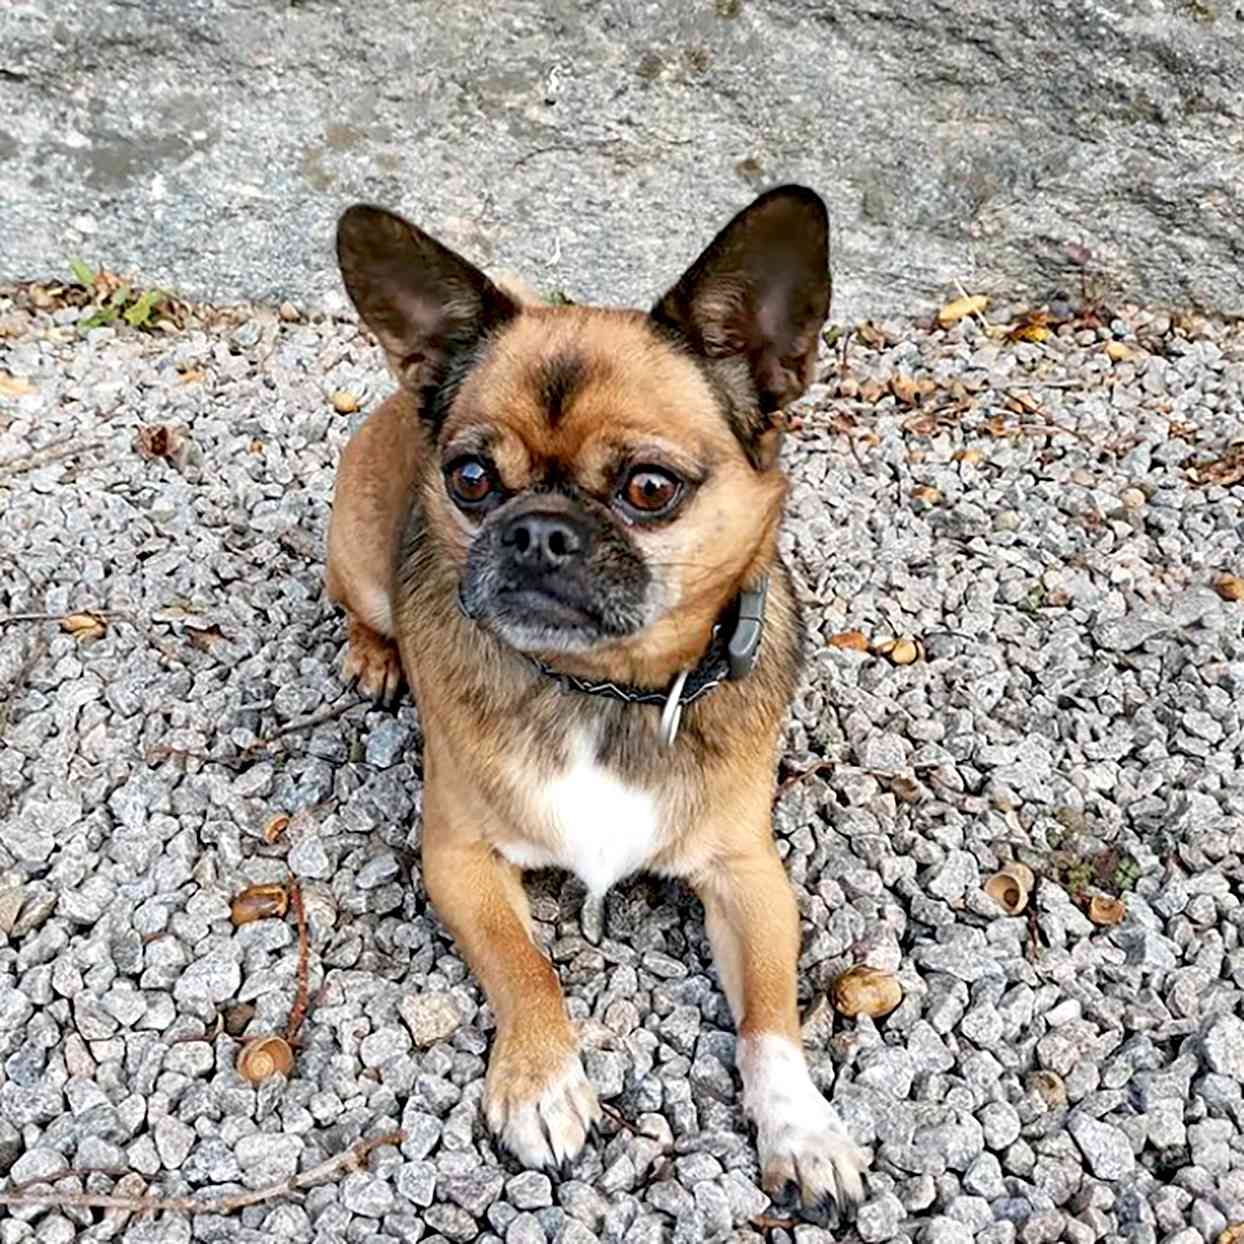 brown Chug dog, Chihuahua and Pug mix, with Chihuahua ears